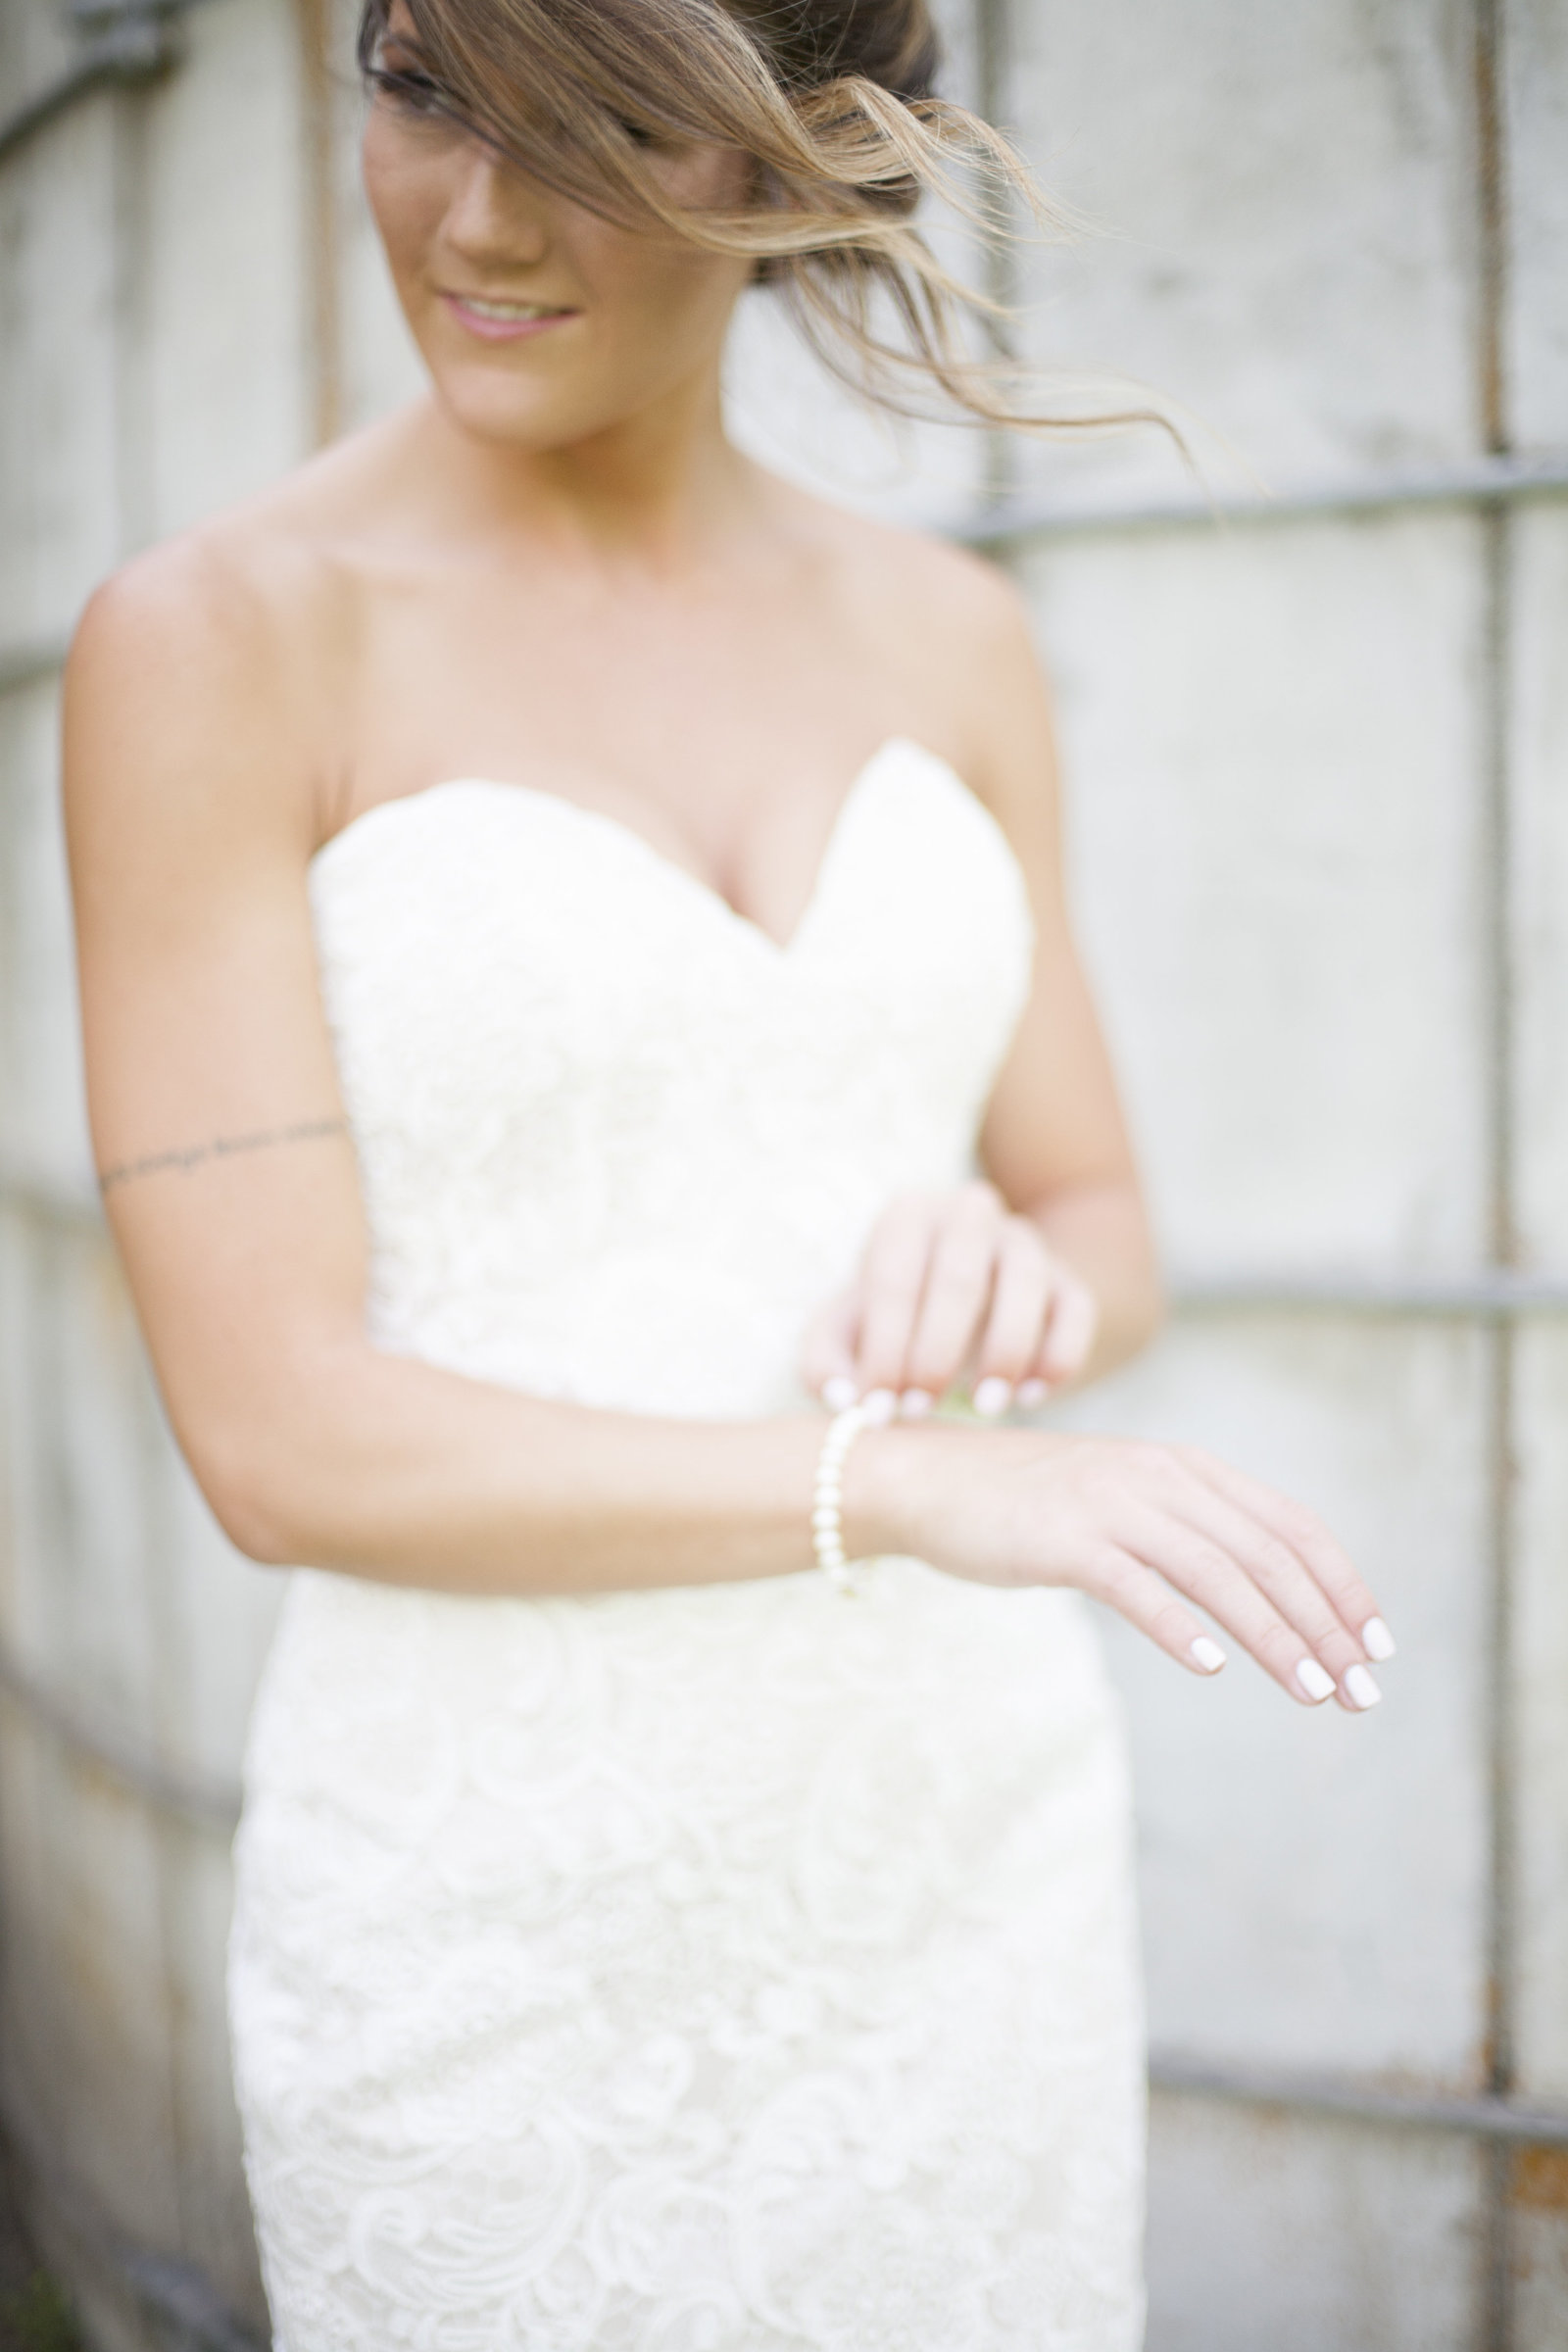 A bride in a sleeveless wedding dress, holding a bracelet.